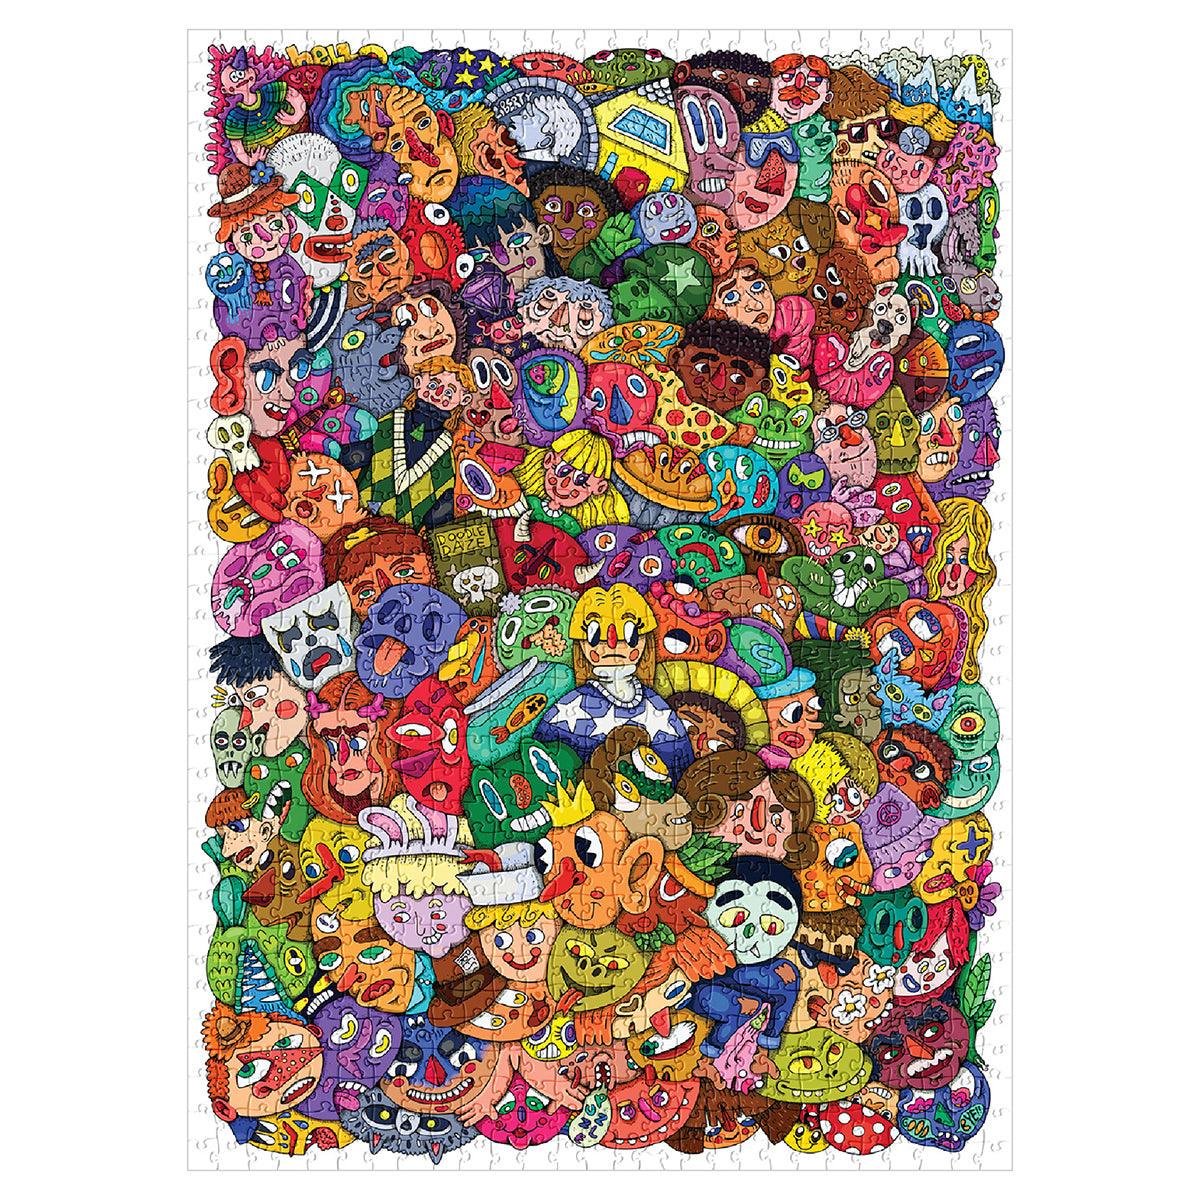 SOONNESS 1000 piece art puzzle doodle by artist Hayley Patternson